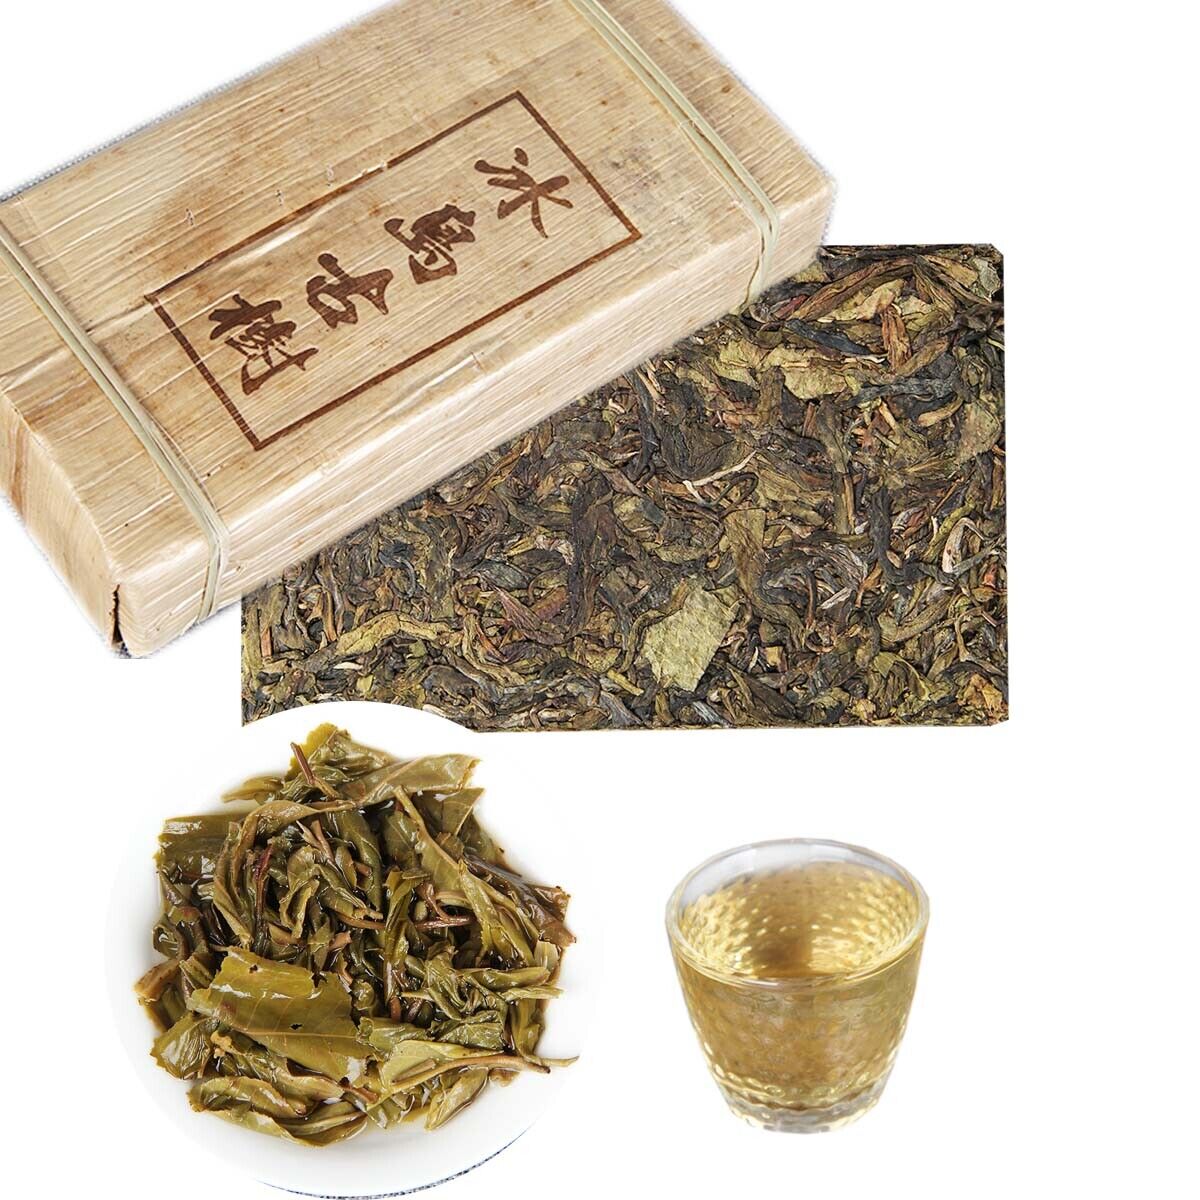 Bingdao Golden Leaf Ancient Tree Candy Sweet Tea Yunnan Puerh Cha Tea Brick 500g